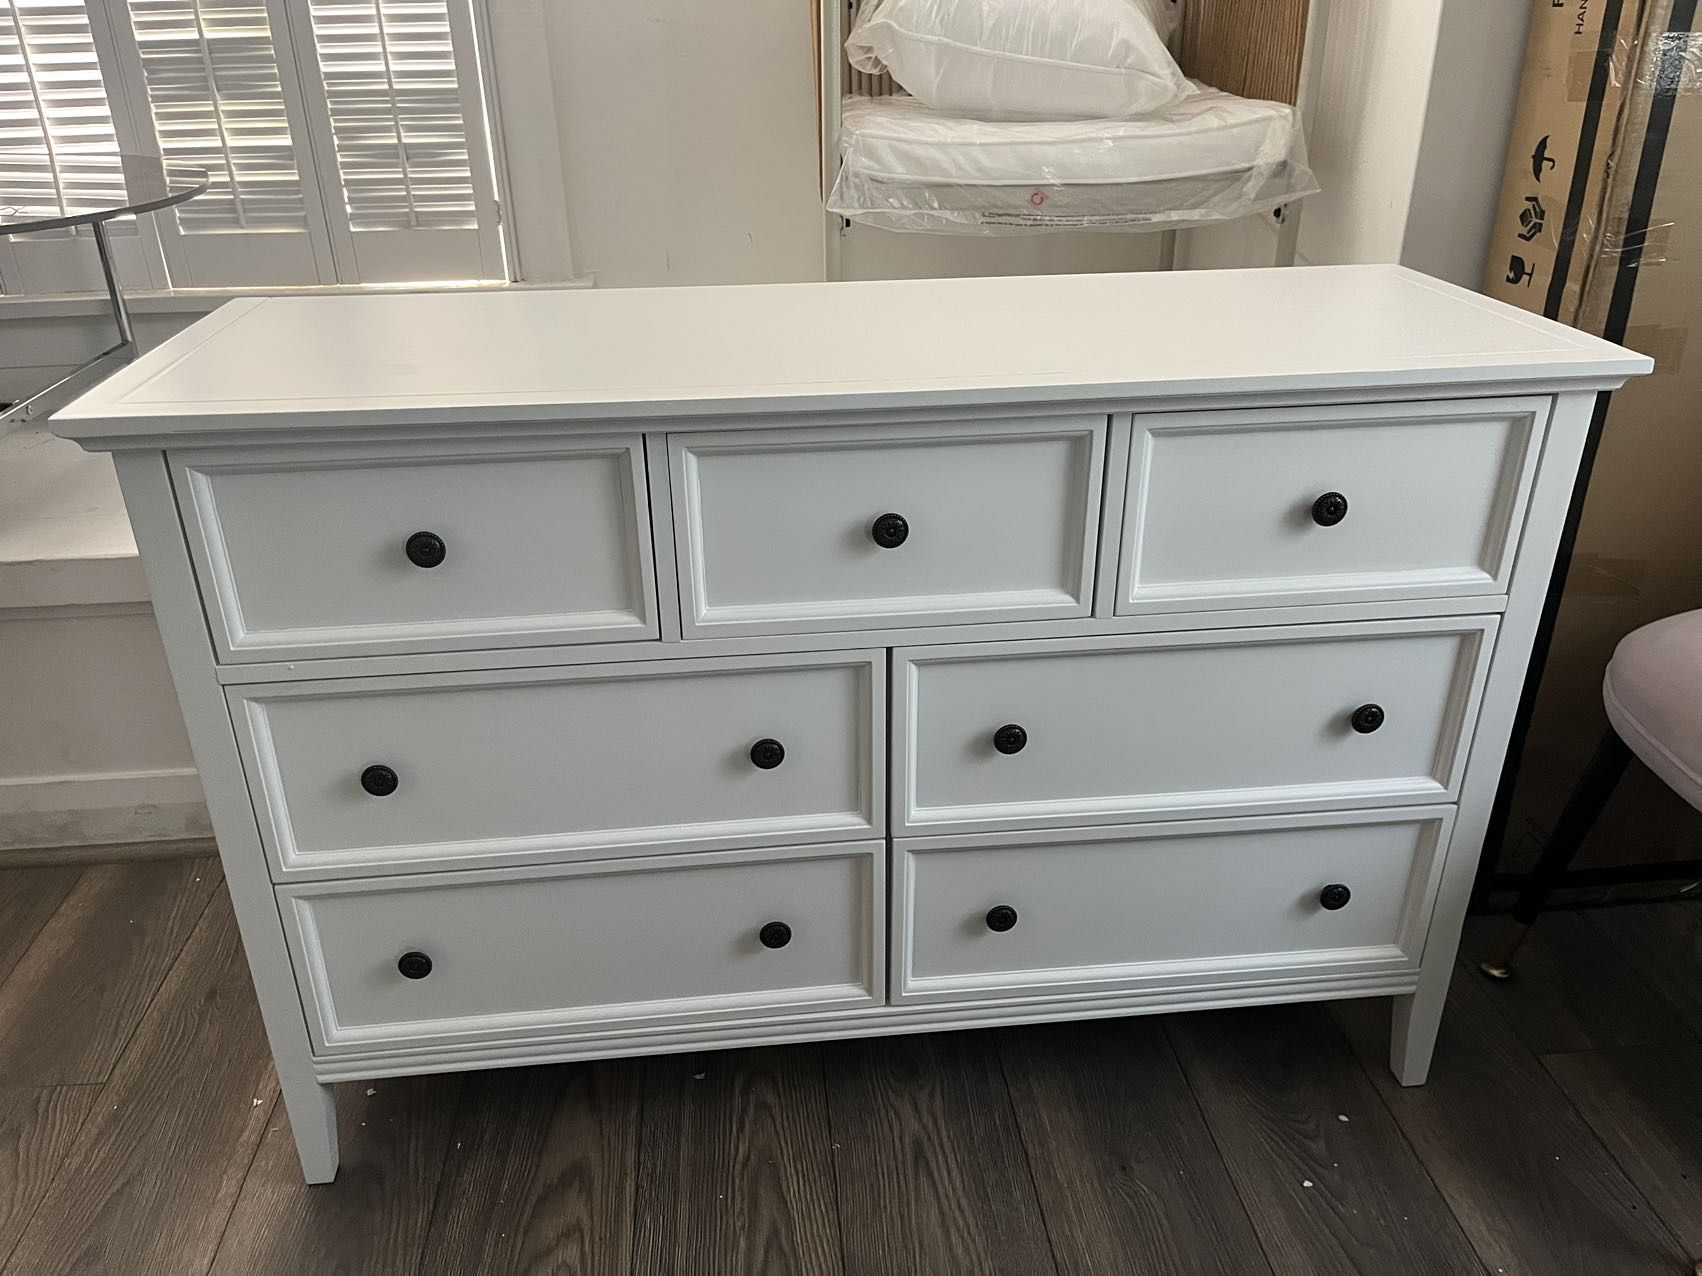 7𝑫𝒓𝒂𝒘𝒆𝒓𝒔 𝑾𝒉𝒊𝒕𝒆 𝑫𝒓𝒆𝒔𝒔𝒆𝒓, White 7 Drawer Dresser for Bedroom Room, Modern Solid Wood Chest of Drawers(White)